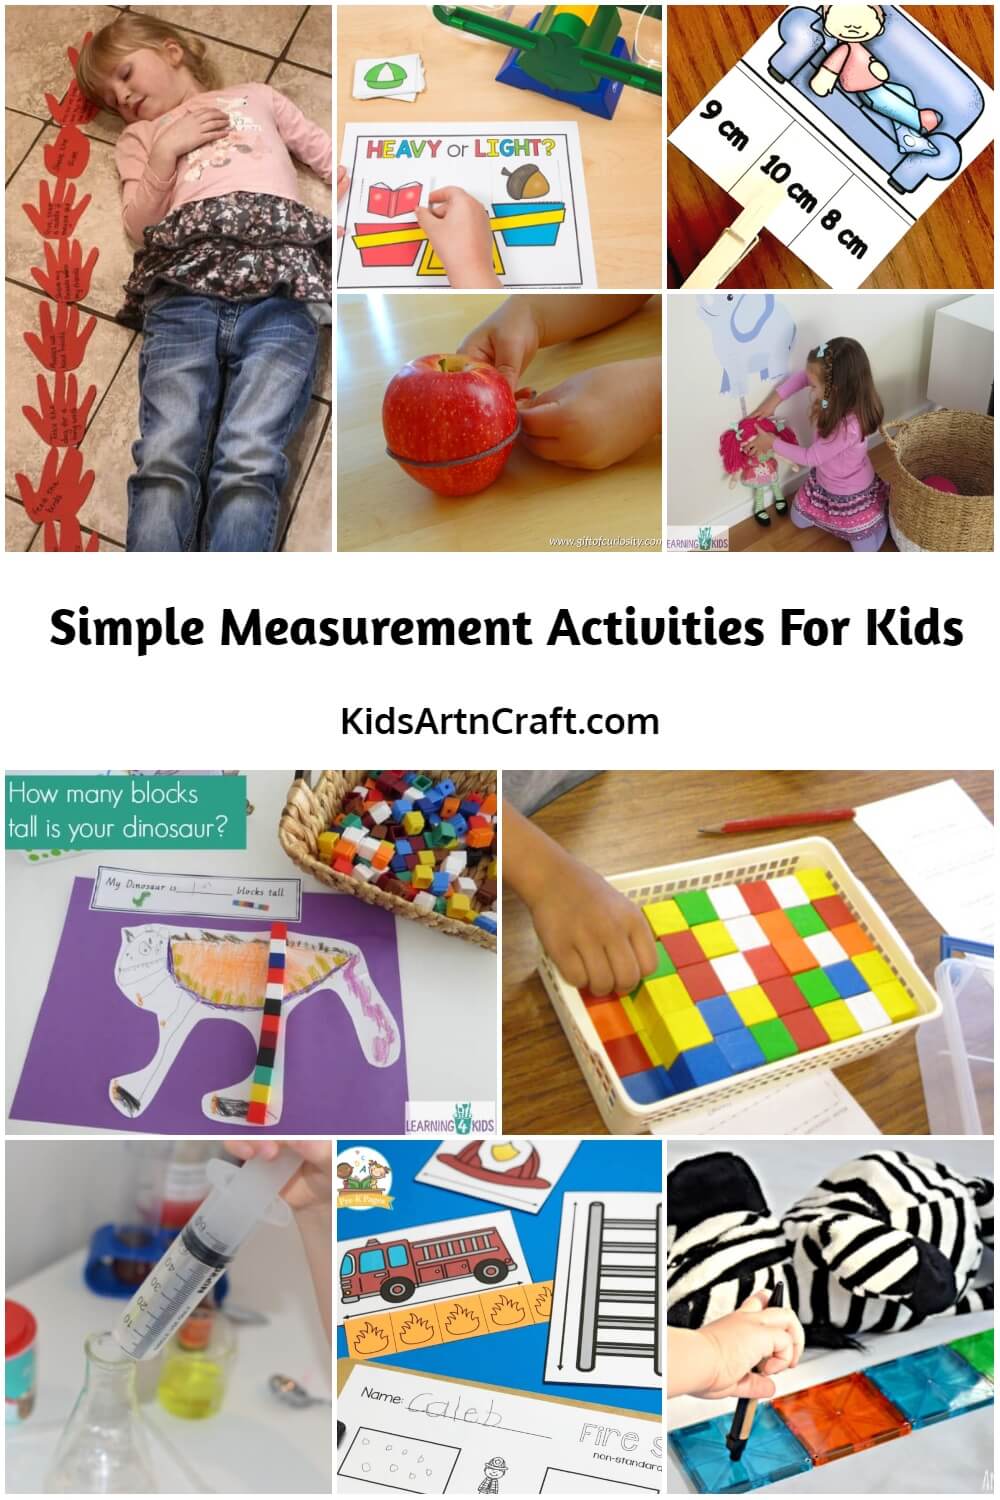 Simple Measurement Activities for Kids